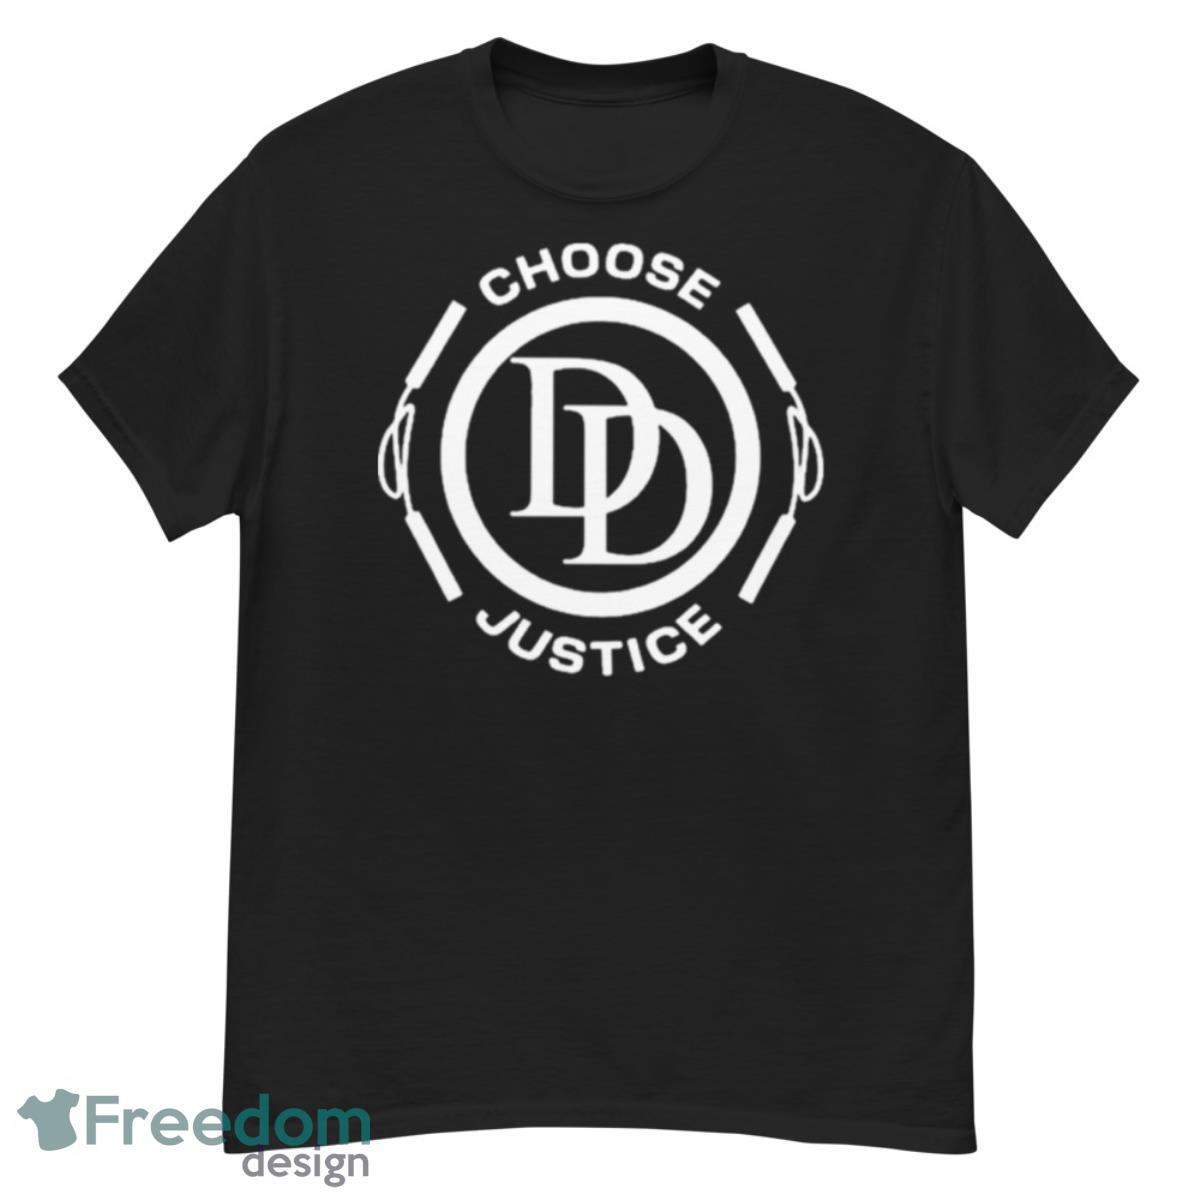 Choose justice daredevil Shirt - G500 Men’s Classic T-Shirt